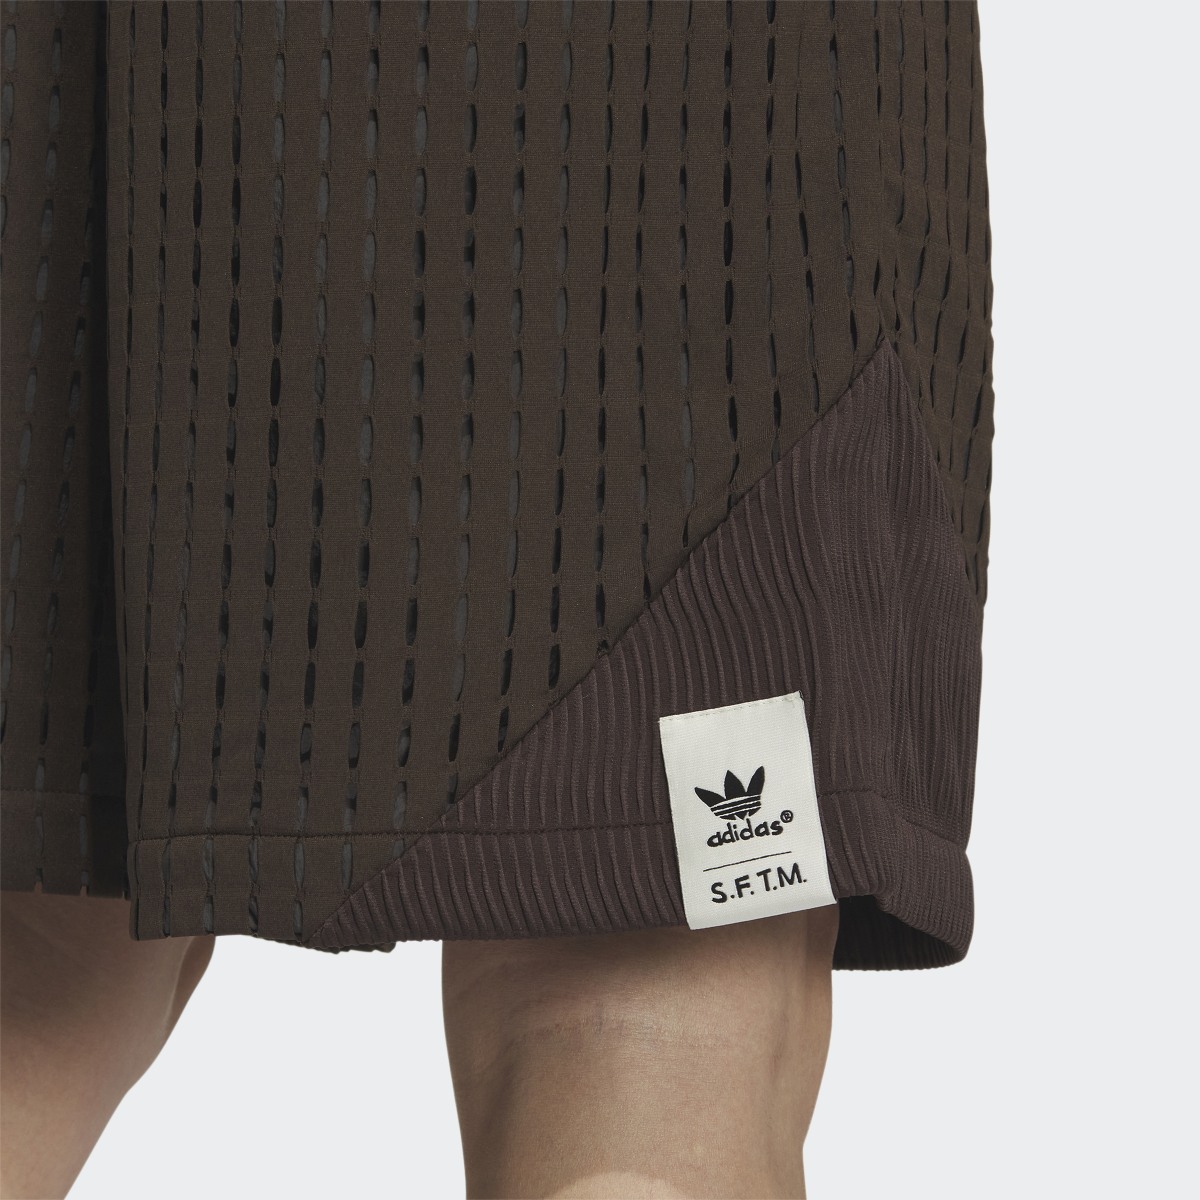 Adidas SFTM Shorts (Gender Neutral). 6